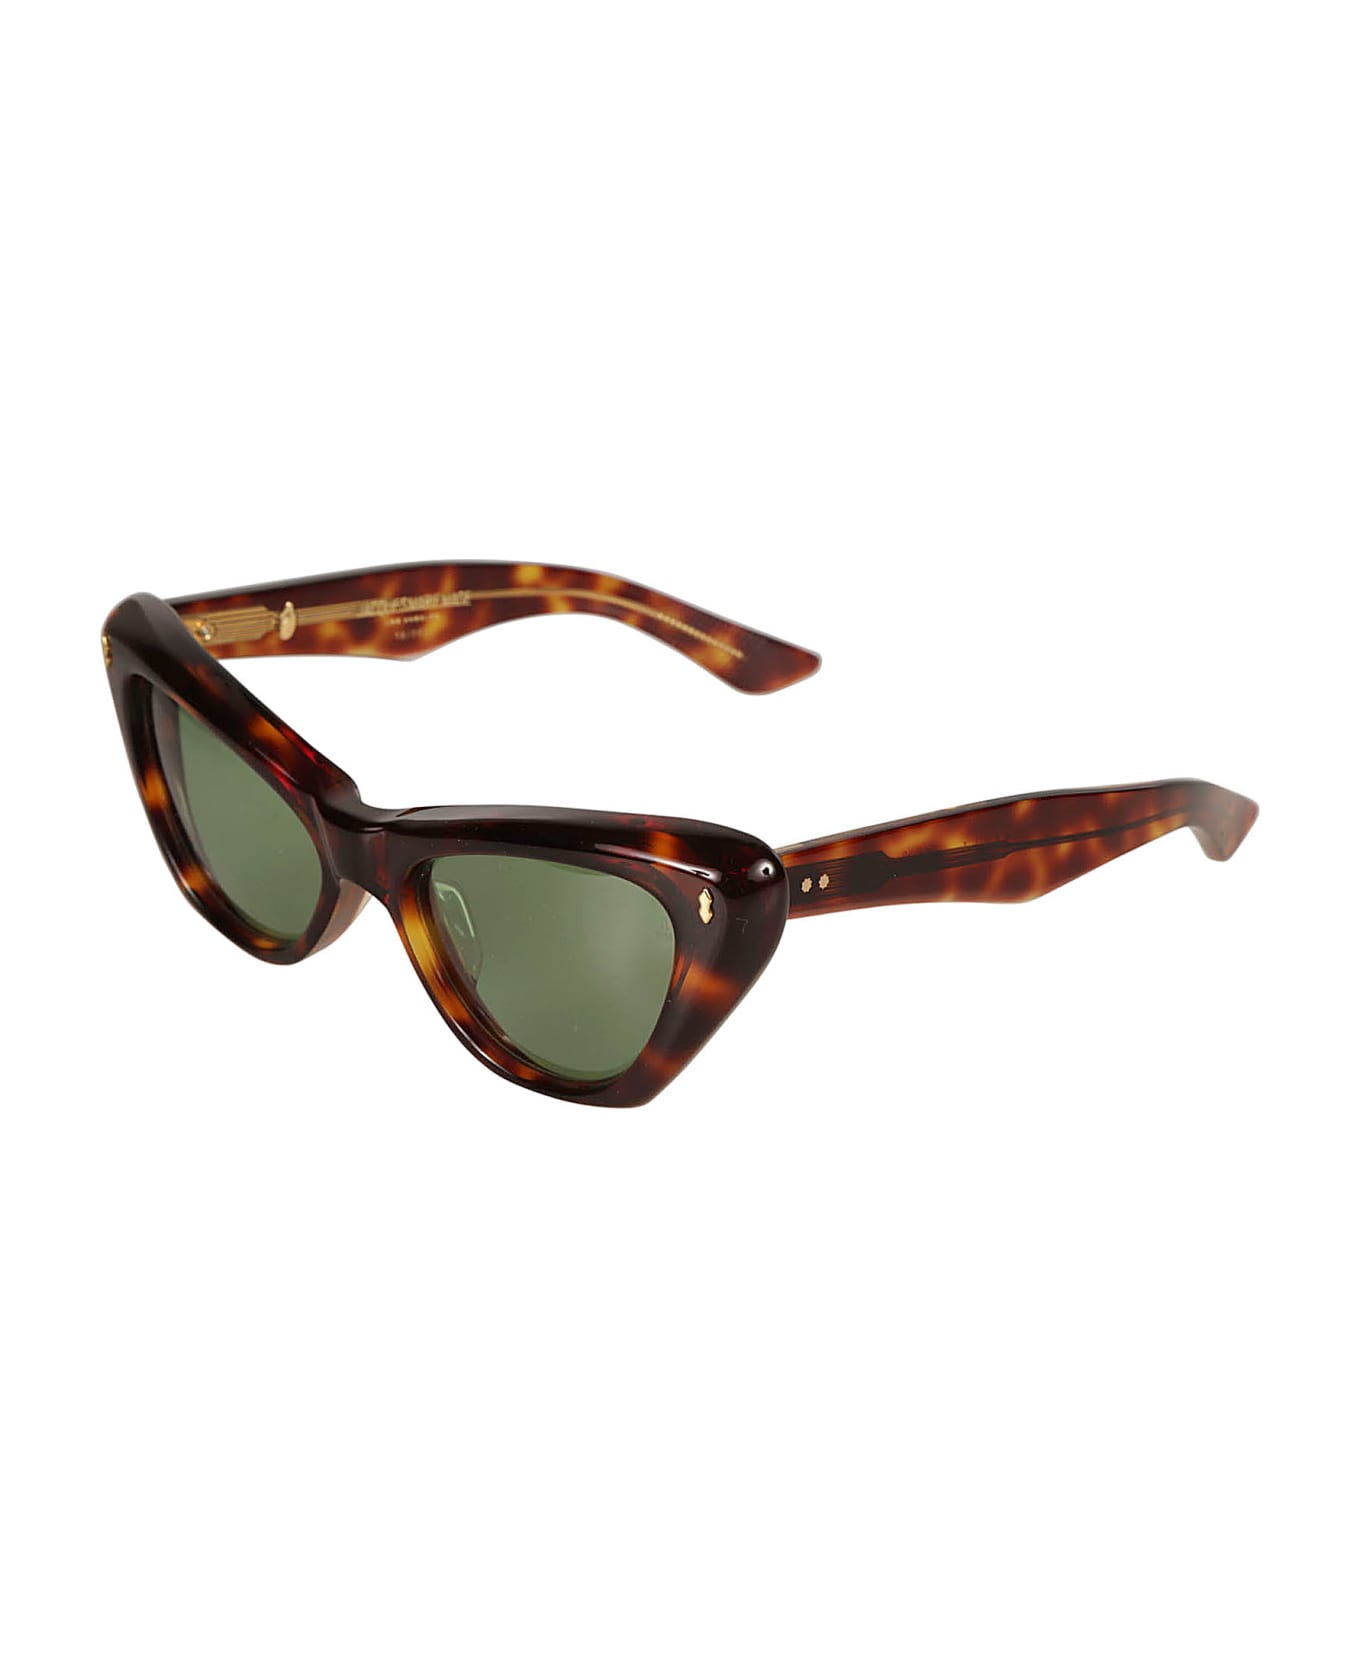 Jacques Marie Mage Kelly Sunglasses Sunglasses - havana サングラス